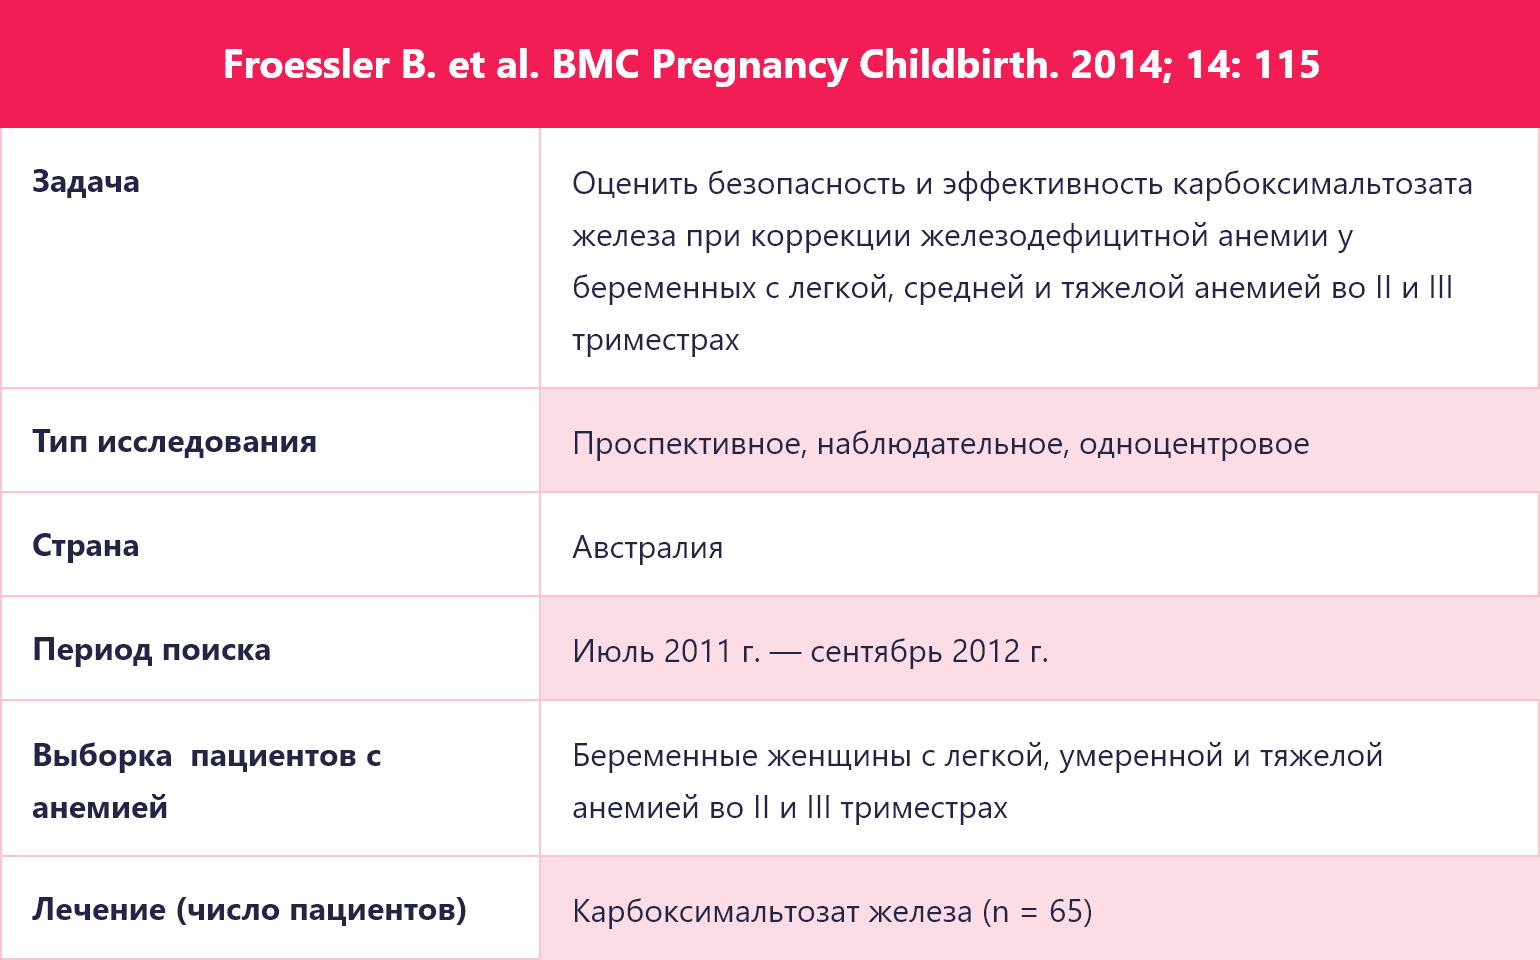 Froessler B. et al. BMC Pregnancy Childbirth. 2014; 14: 115